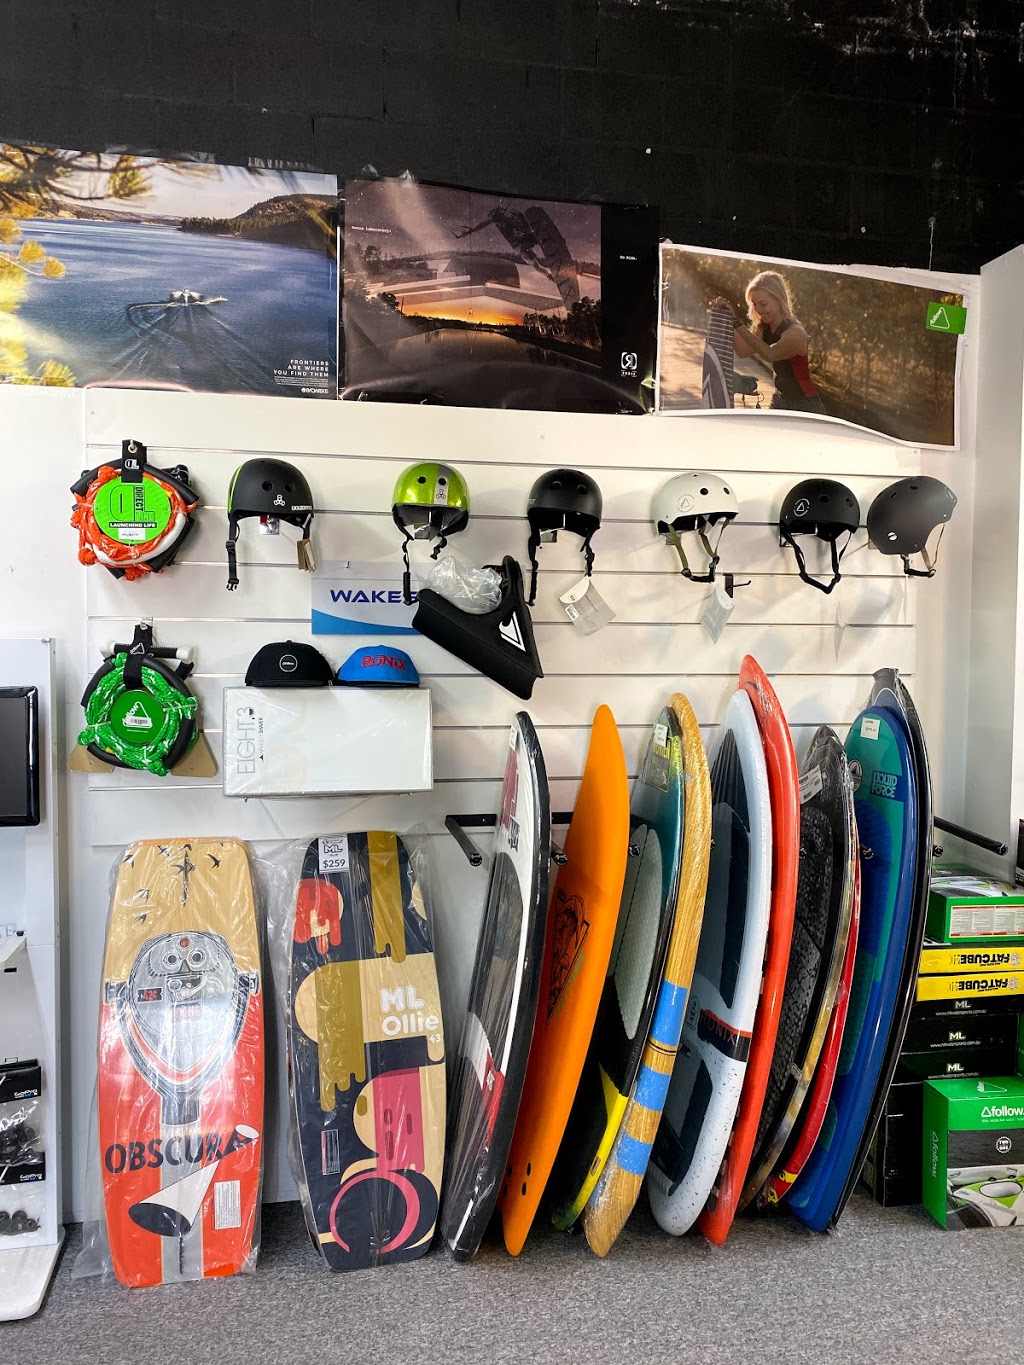 Ski Surf & Snow | store | 1/138 George St, Rockhampton QLD 4700, Australia | 0749227074 OR +61 7 4922 7074